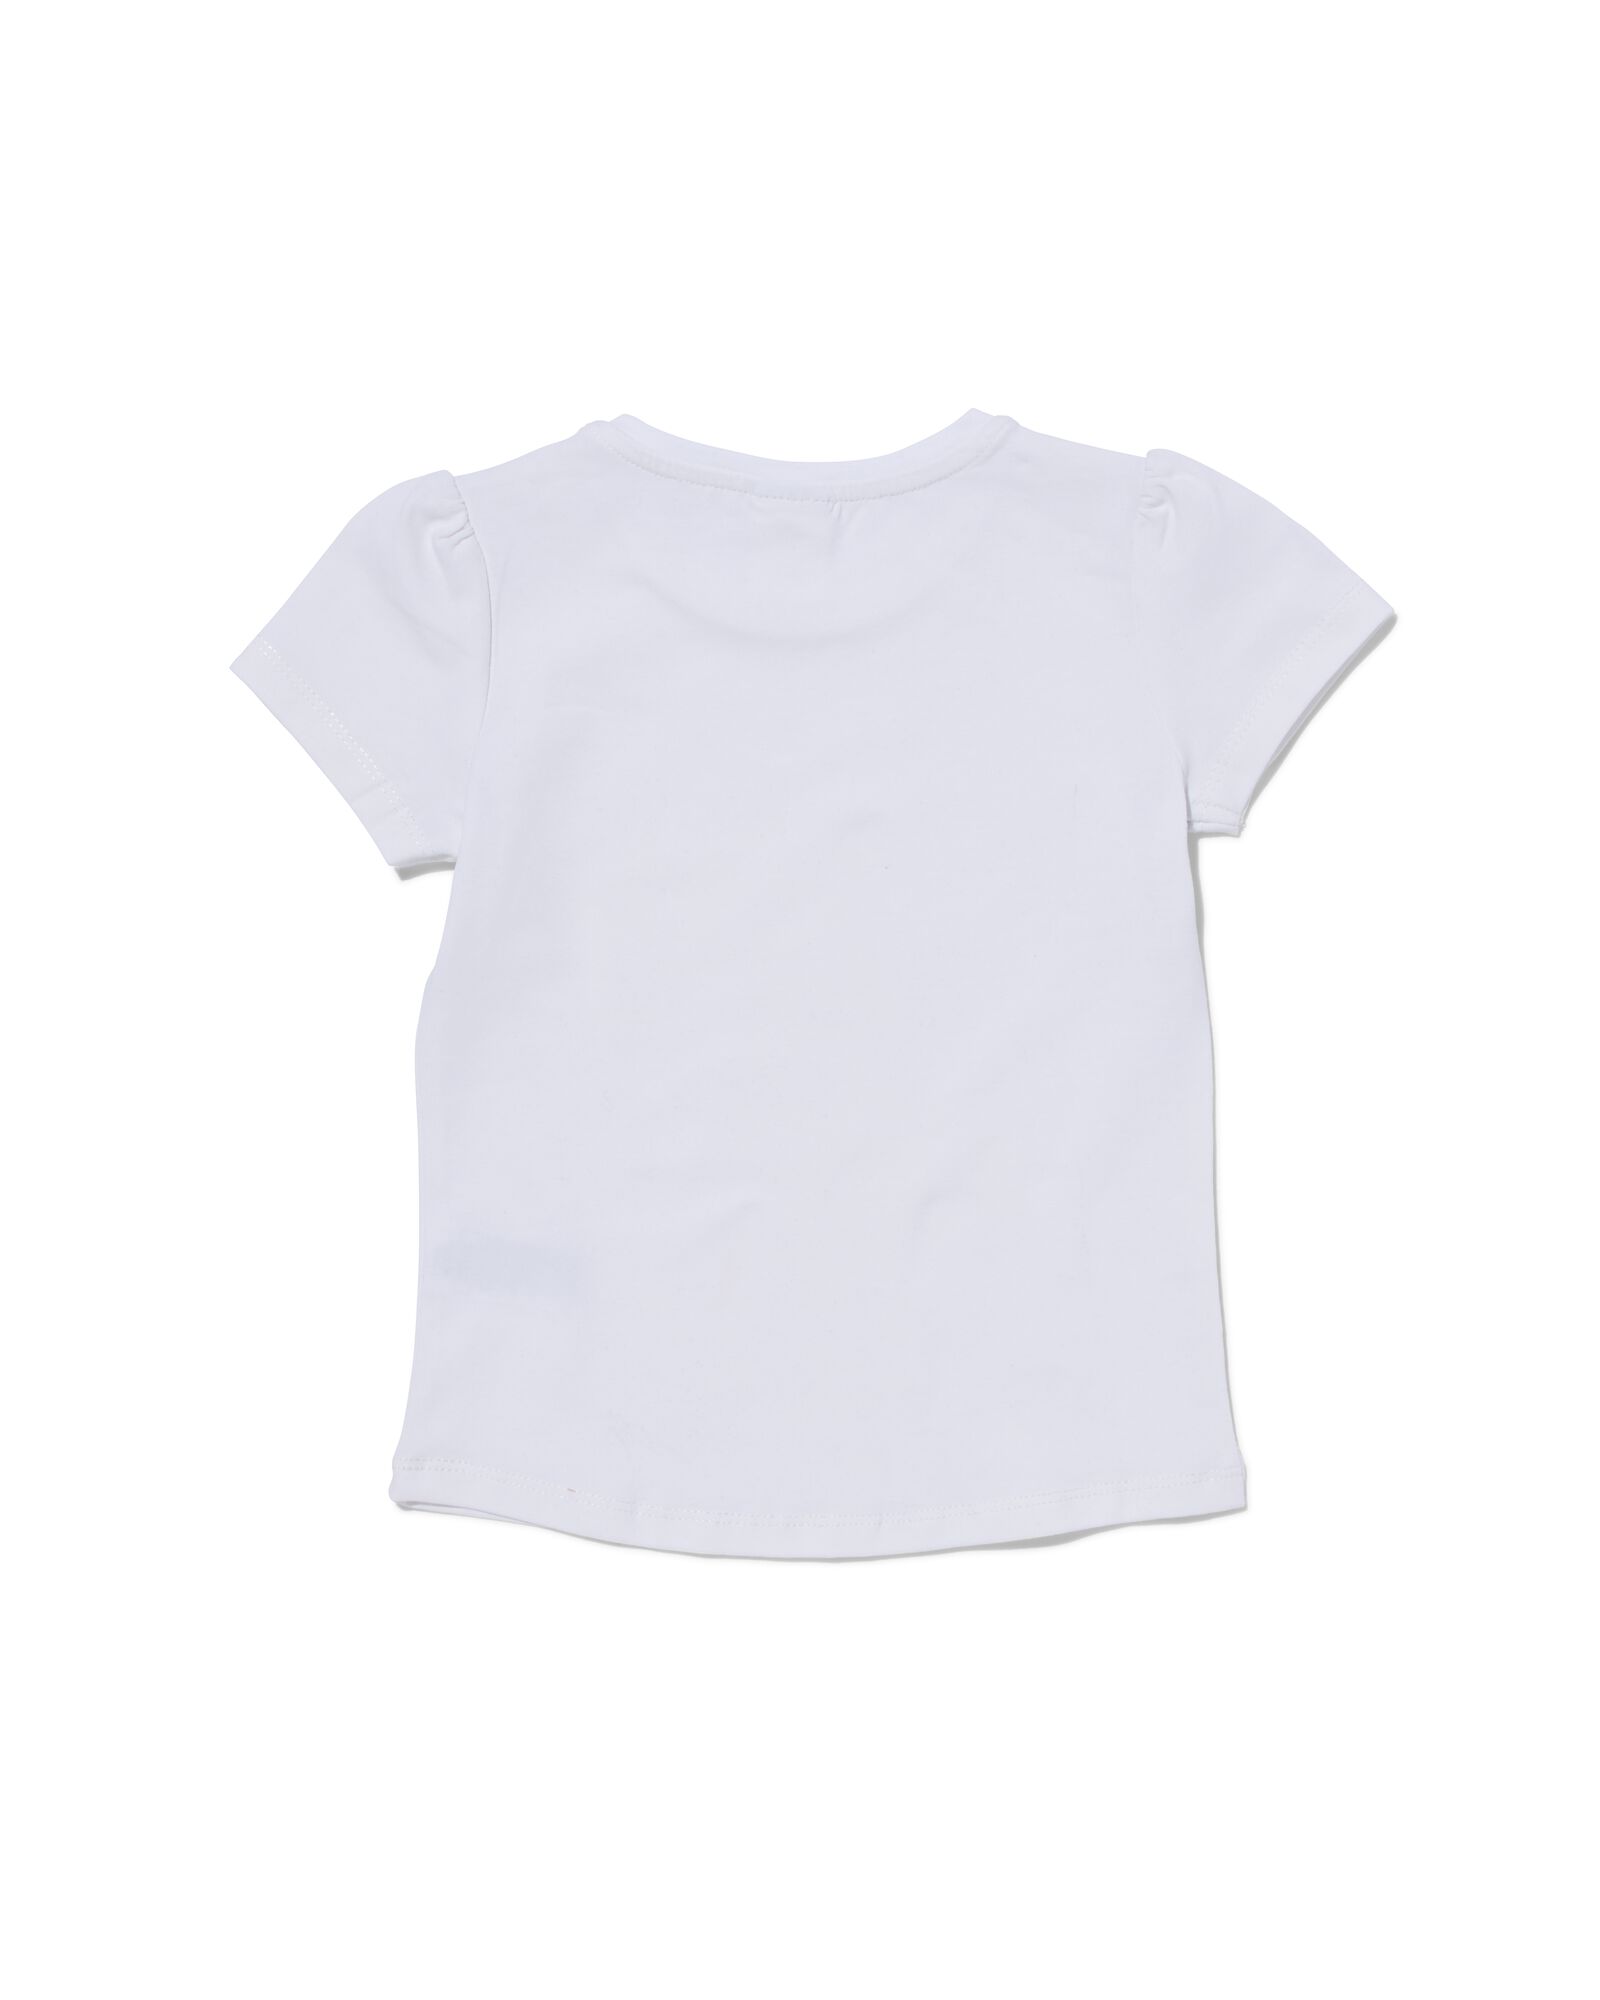 kinder t-shirts - 2 stuks wit 134/140 - 30843934 - HEMA